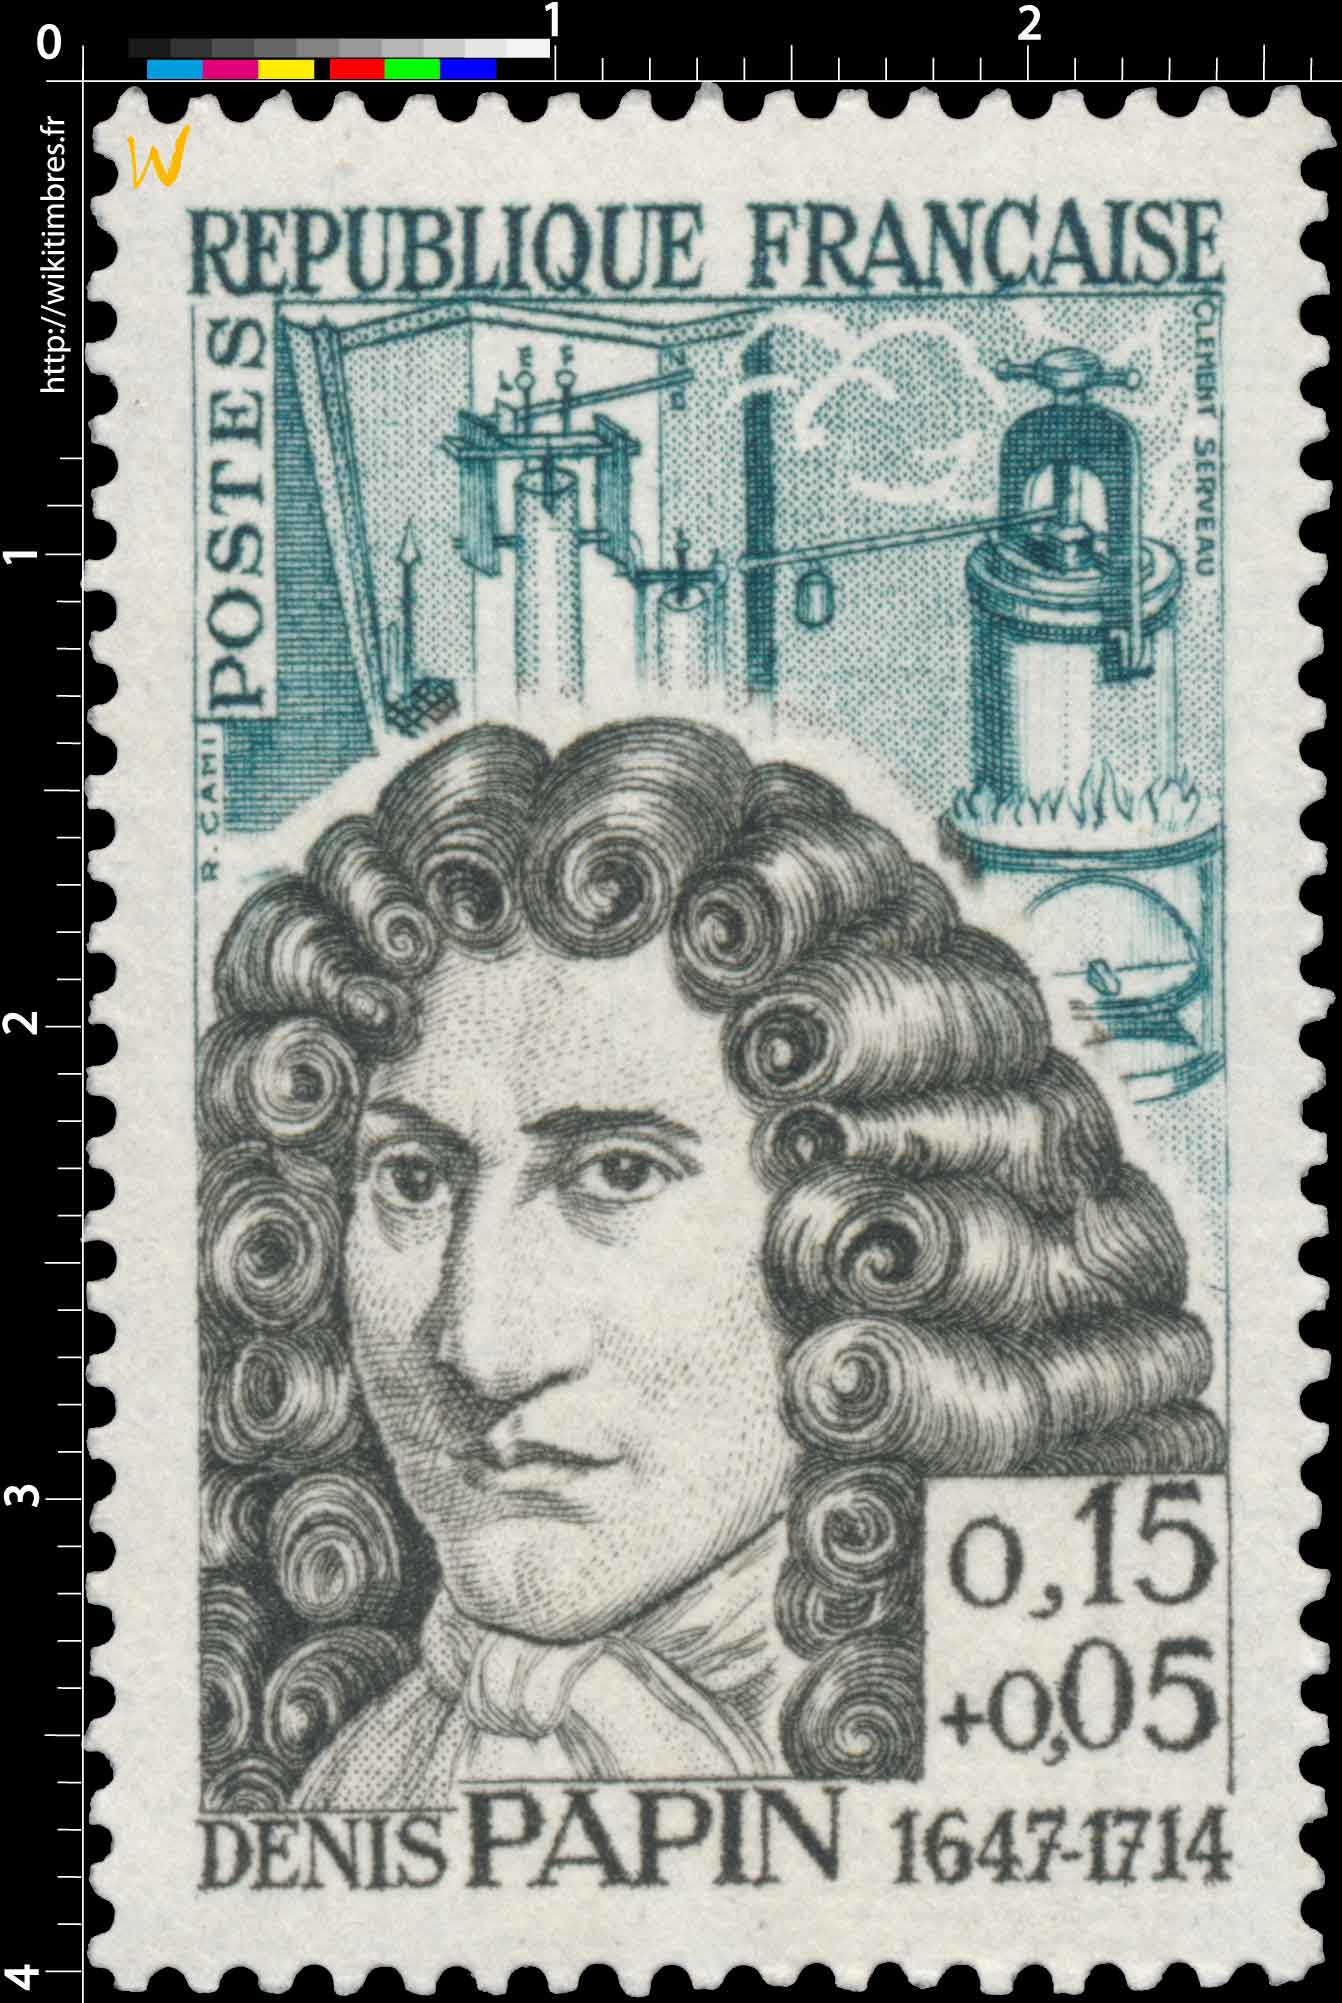 DENIS PAPIN 1647-1714